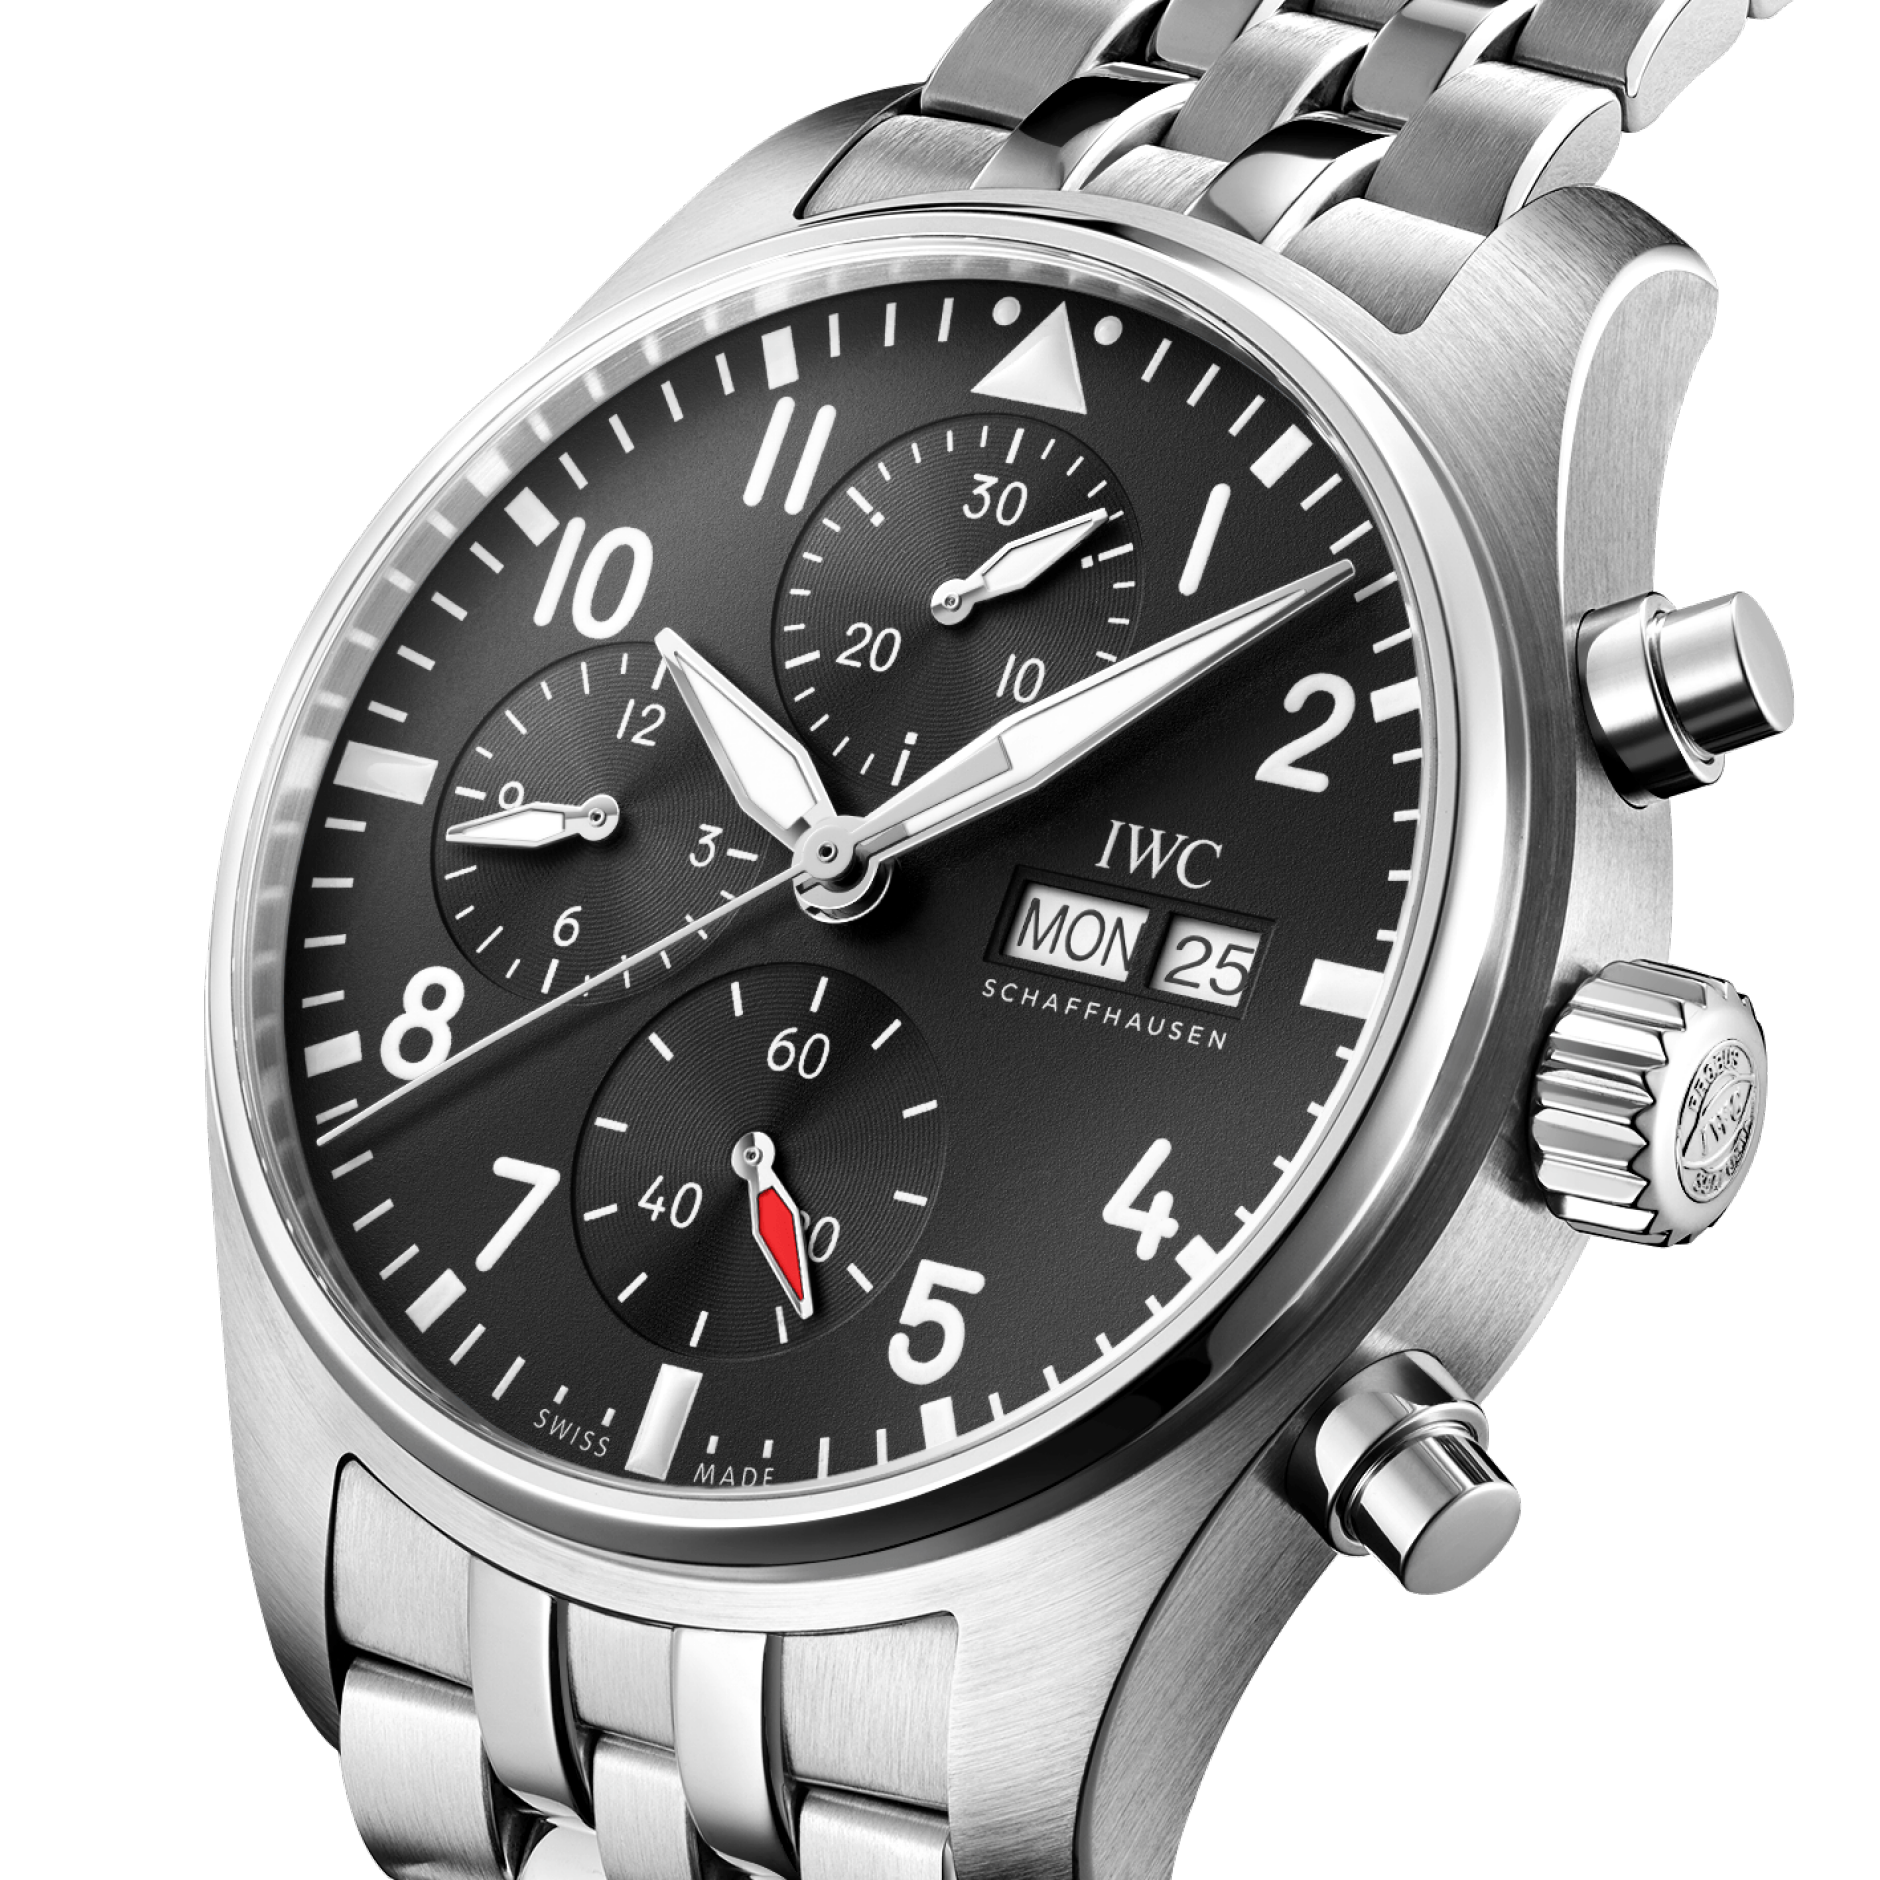 IWC Schaffhausen Pilot's Watch Chronograph 41, model #IW388113, at IJL Since 1937